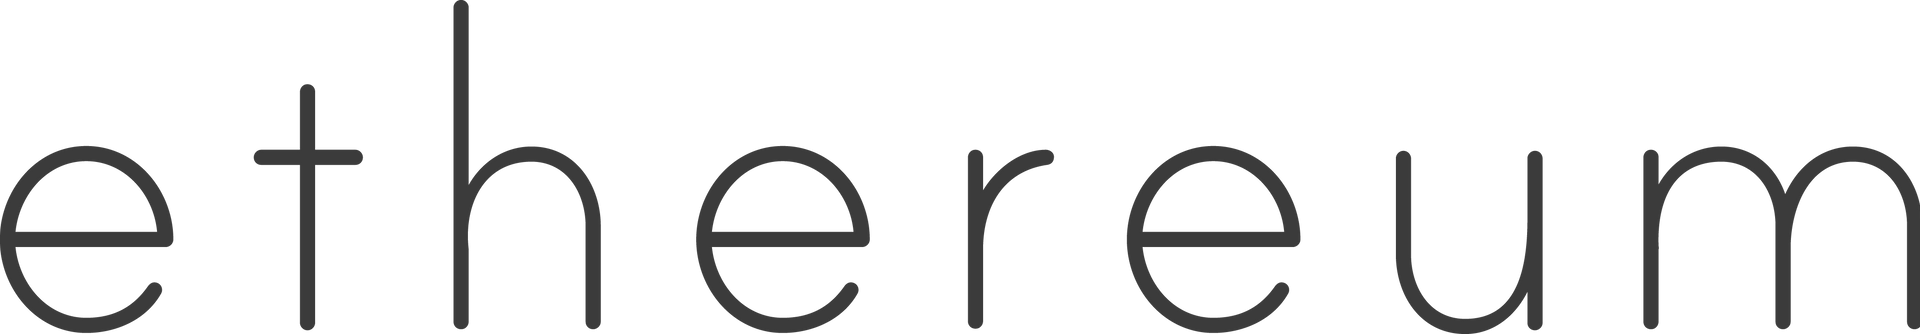 ETH wordmark (gray)